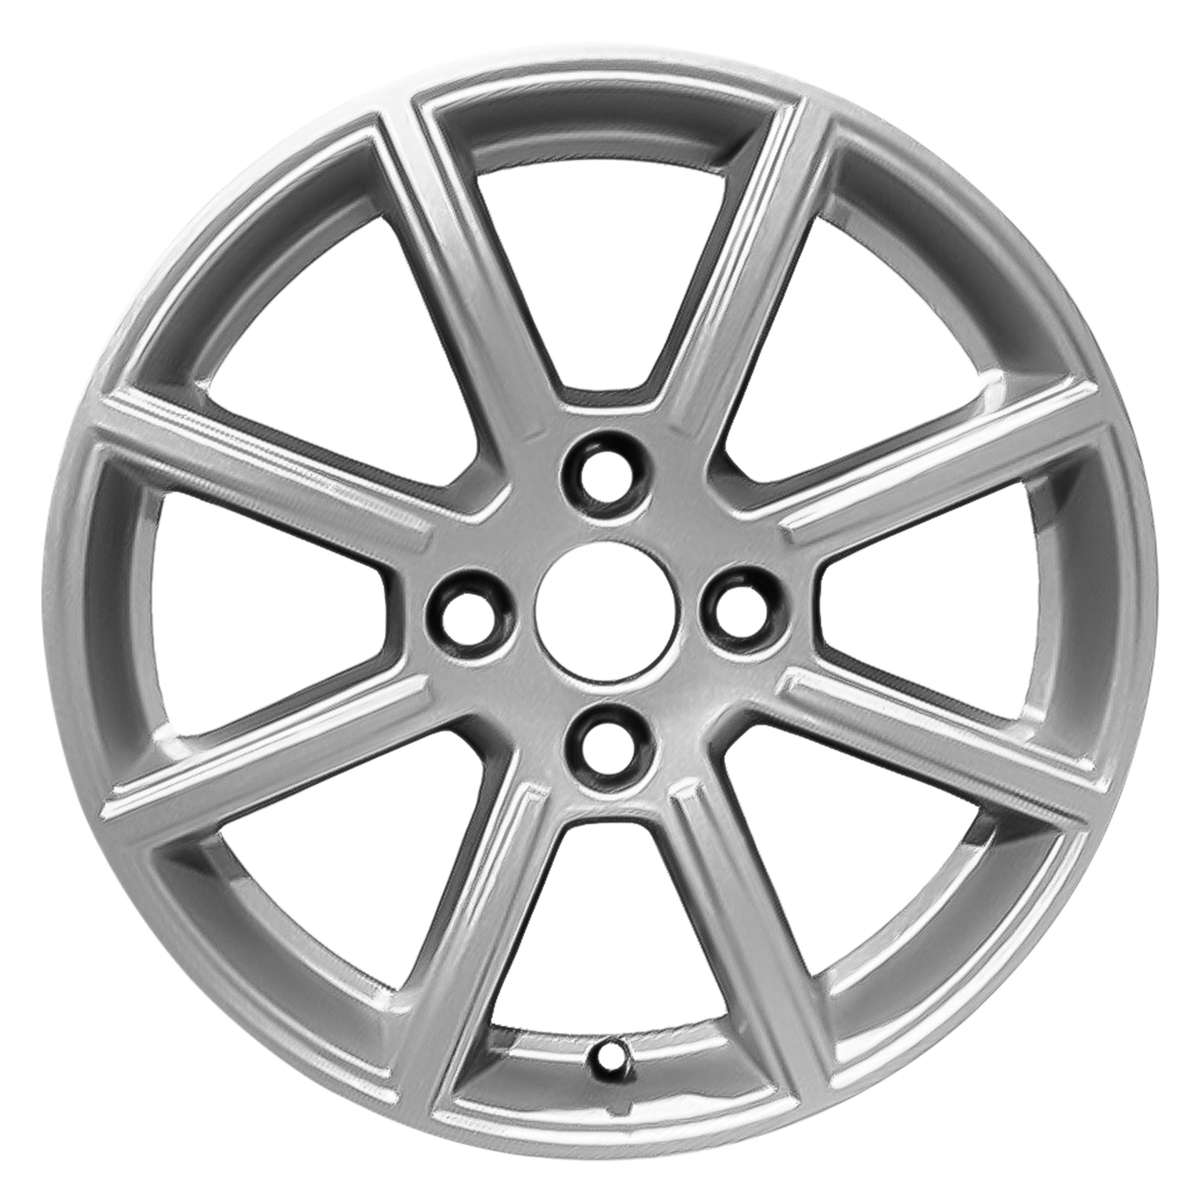 2015 Ford Fiesta 16" OEM Wheel Rim W10009S